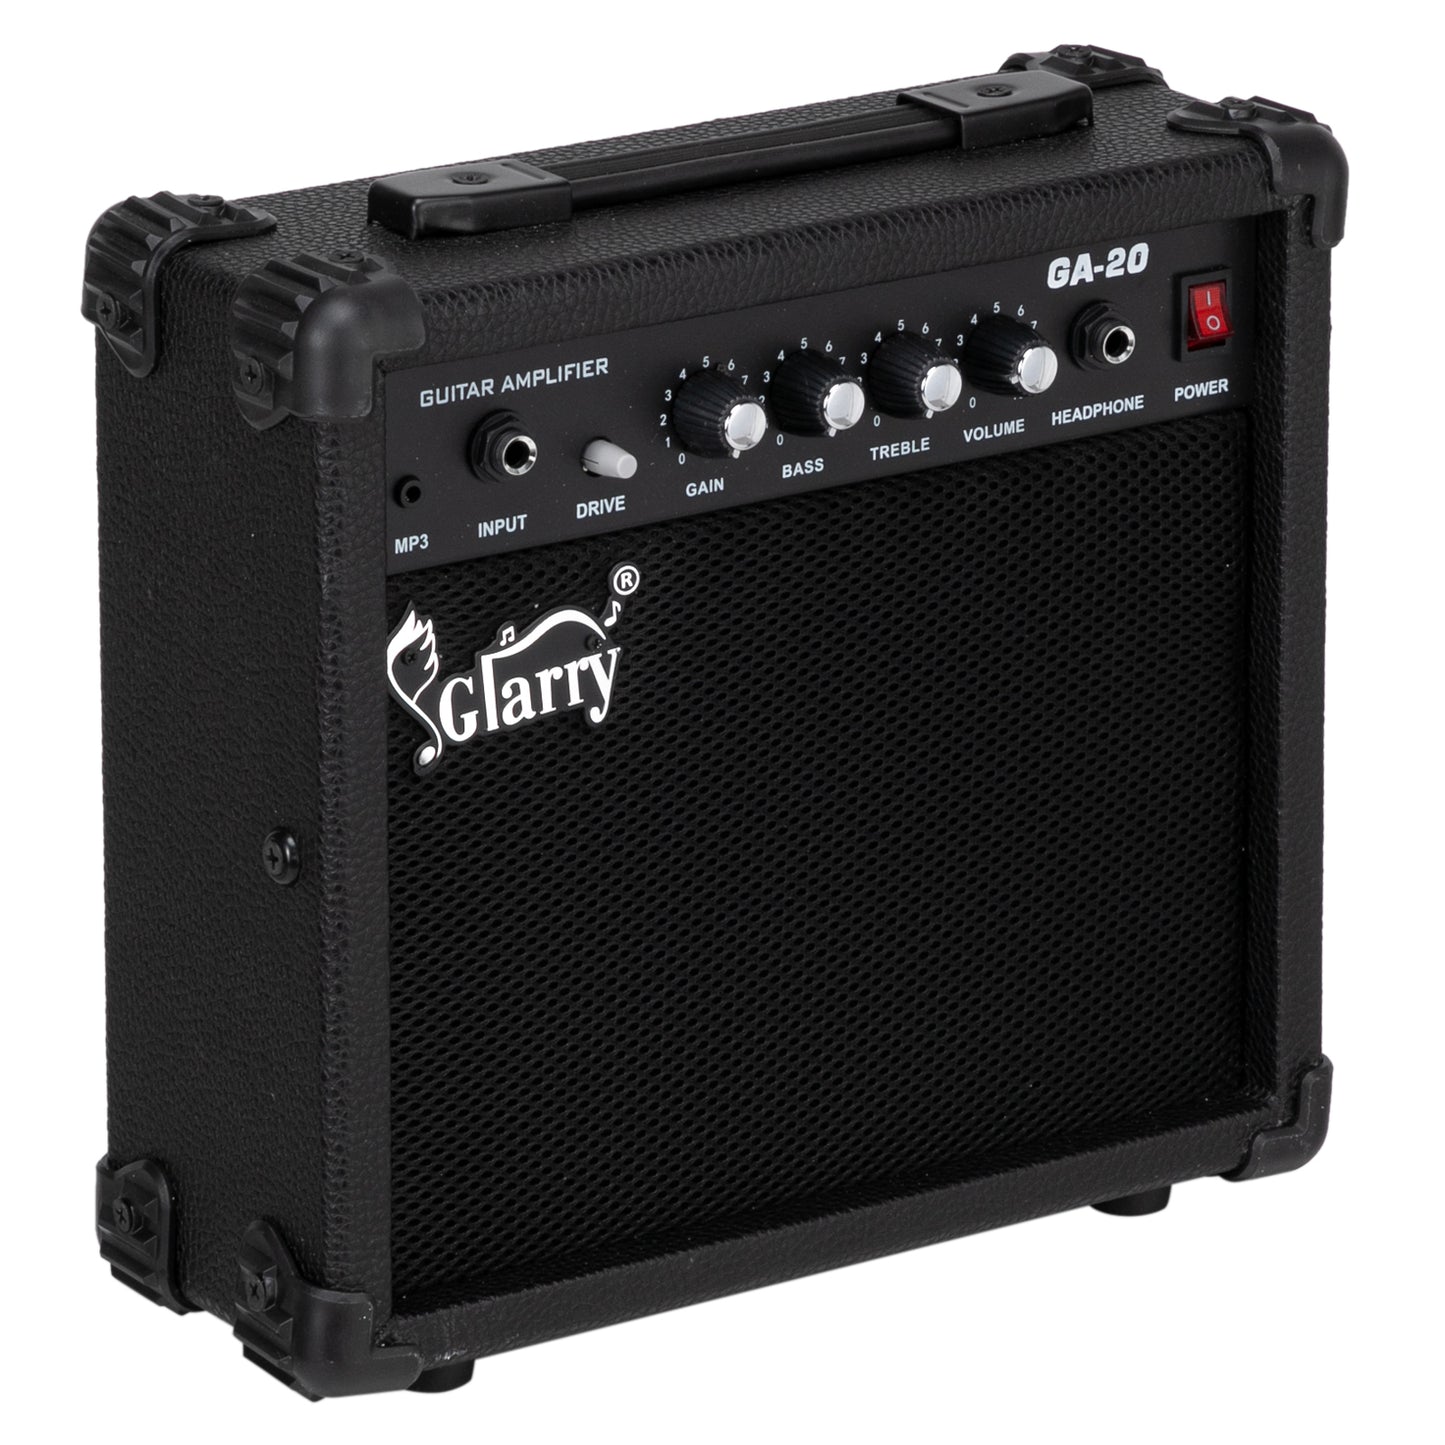 Glarry 20w Electric Guitar Amplifier MLNshops